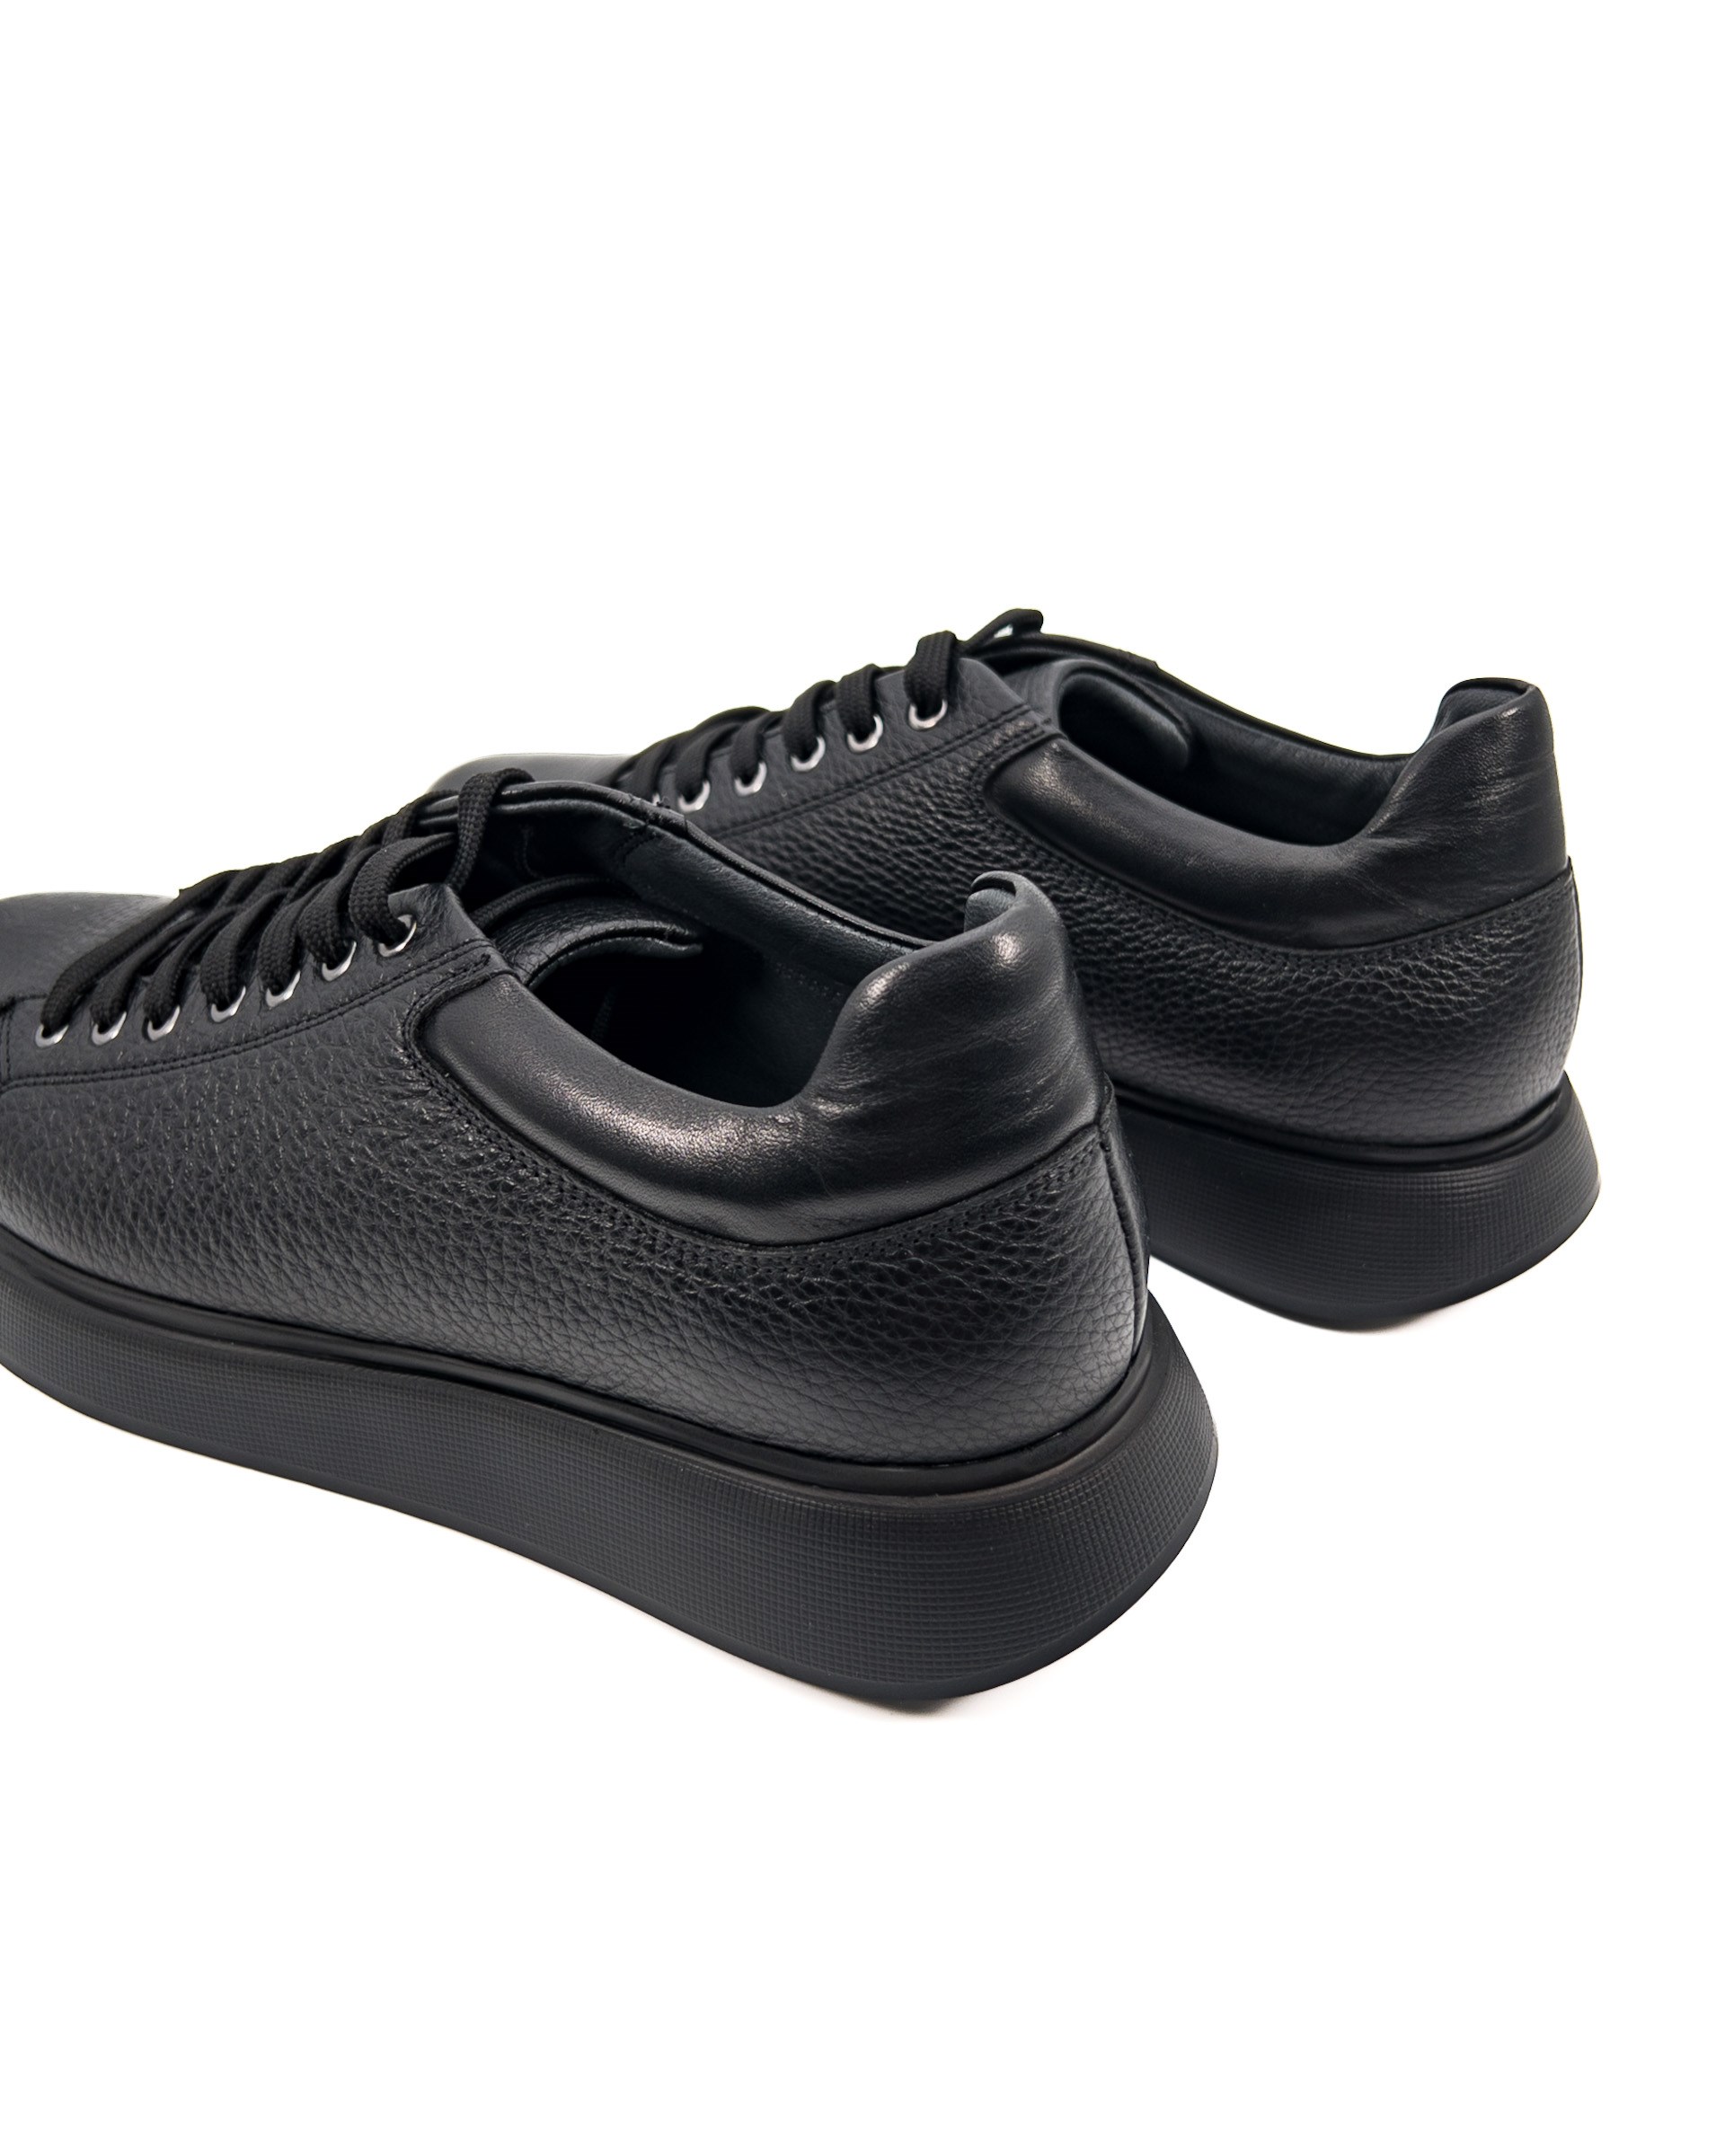 Twin Black Genuine Leather Men's Sports Sneaker Shoes | Tezcan